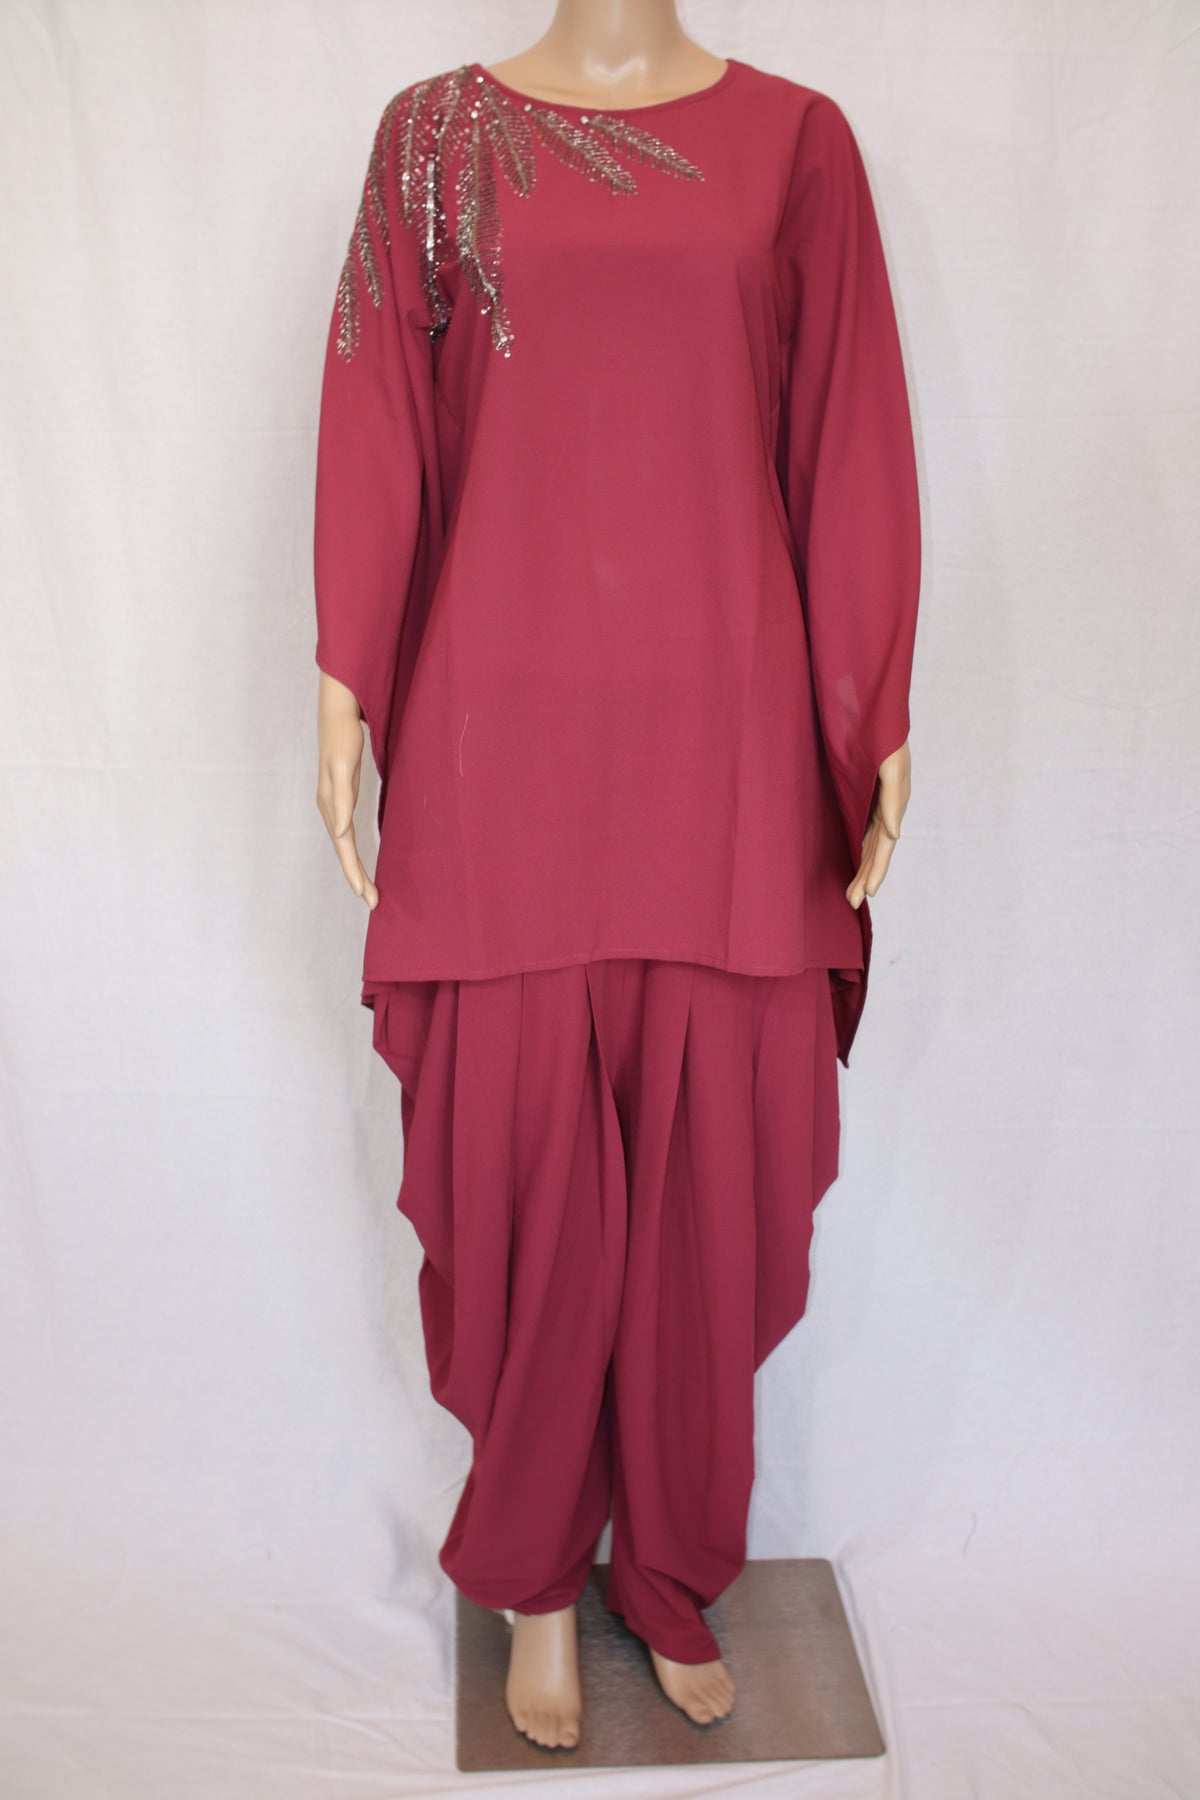 Indo western Dhoti dress